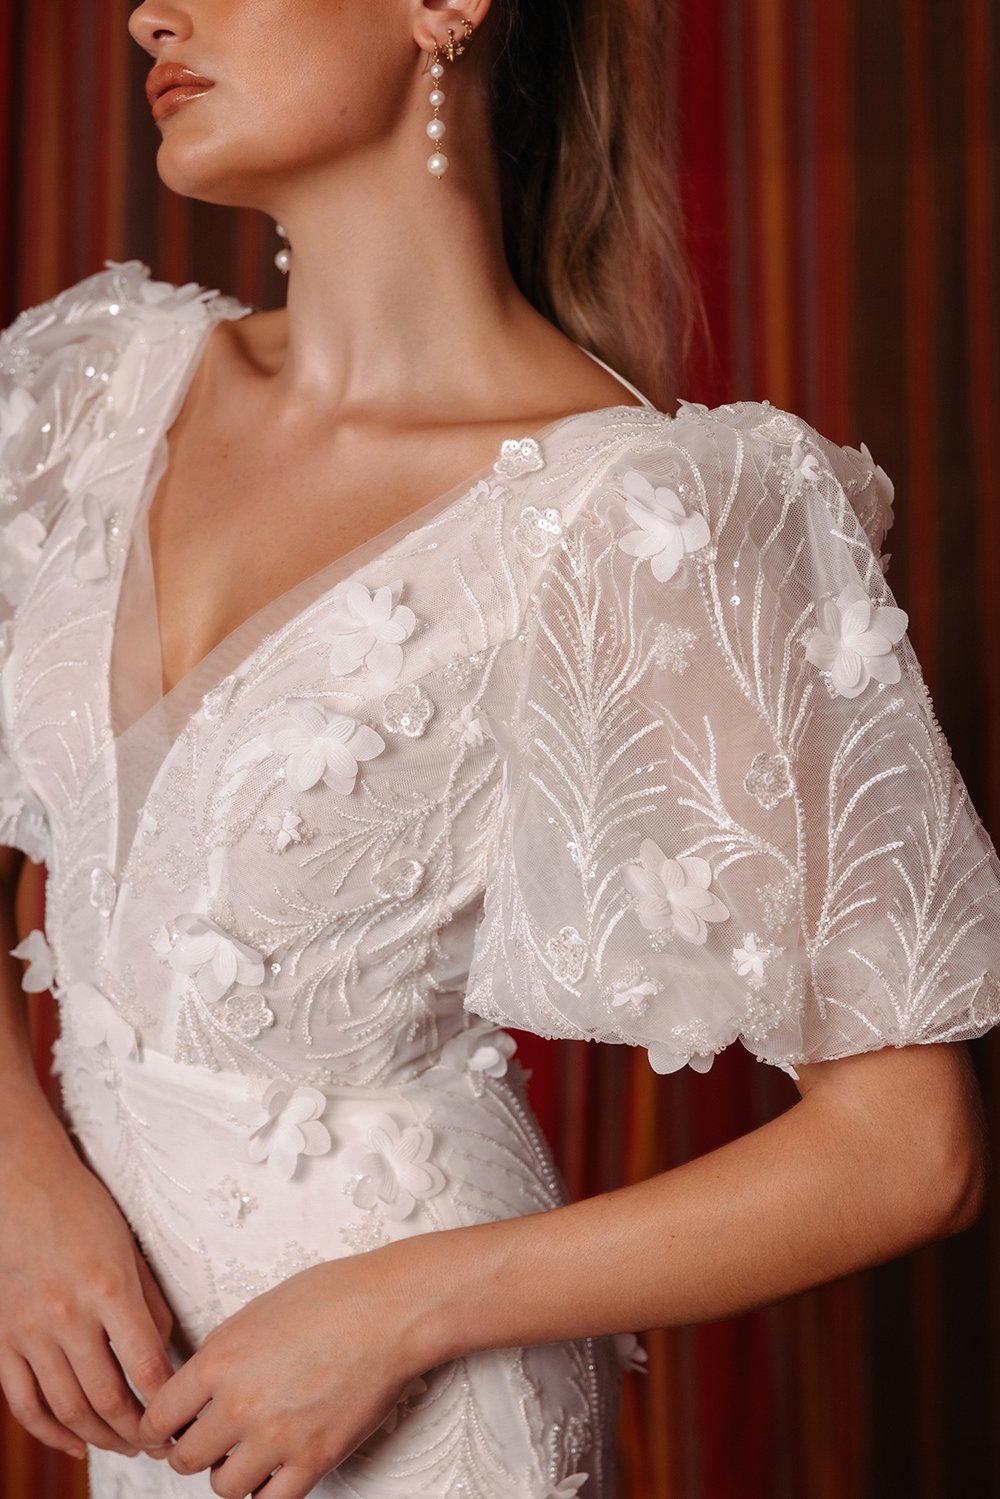 blanc-de-blanc-bridal-boutique-pittsburgh-dress-wedding-gown-euphoria..jpg